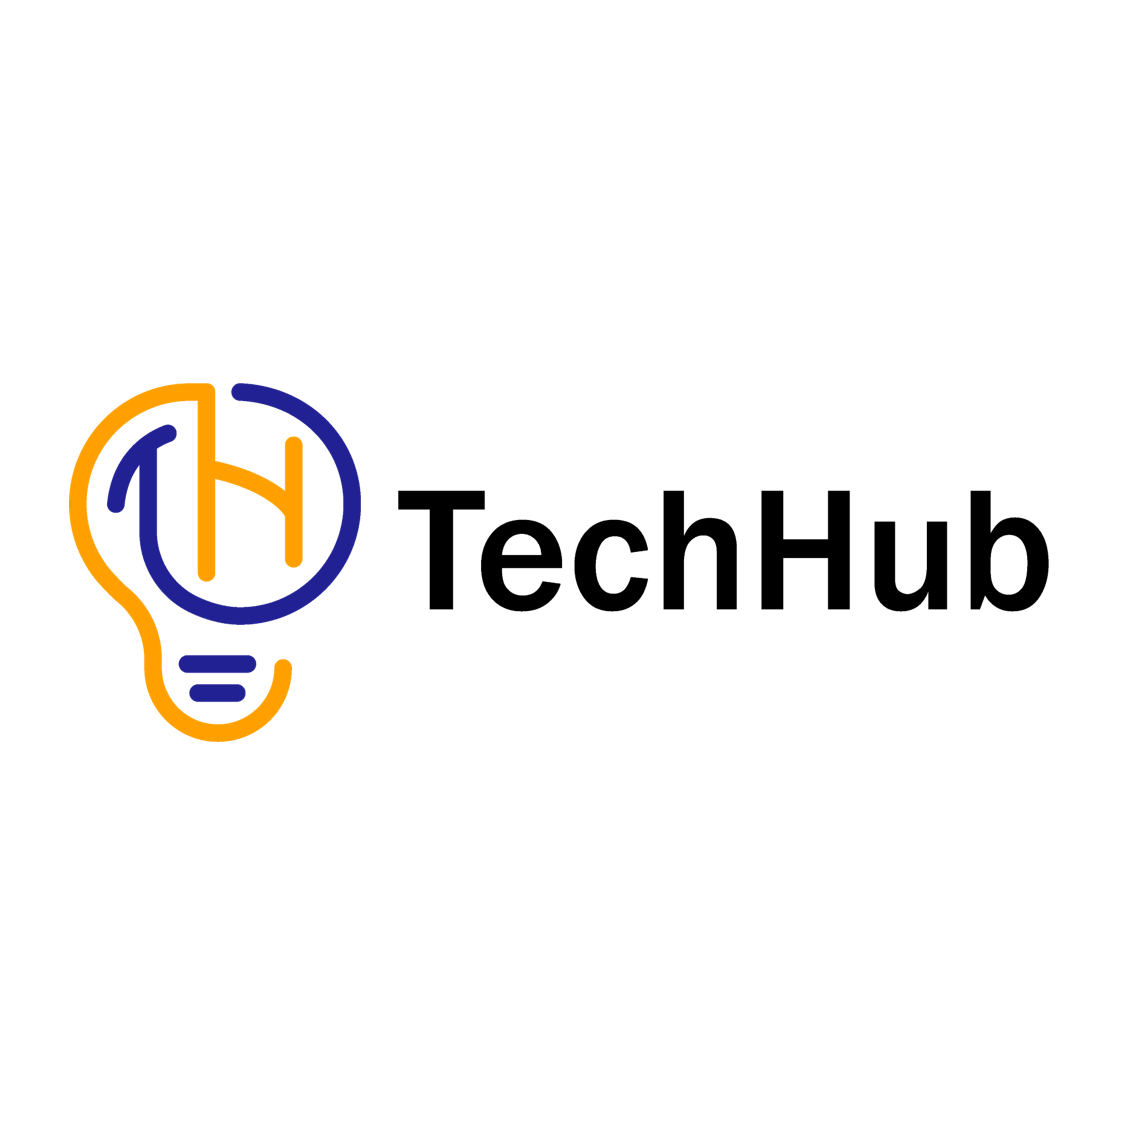 TechHub Asia profile on Qualified.One